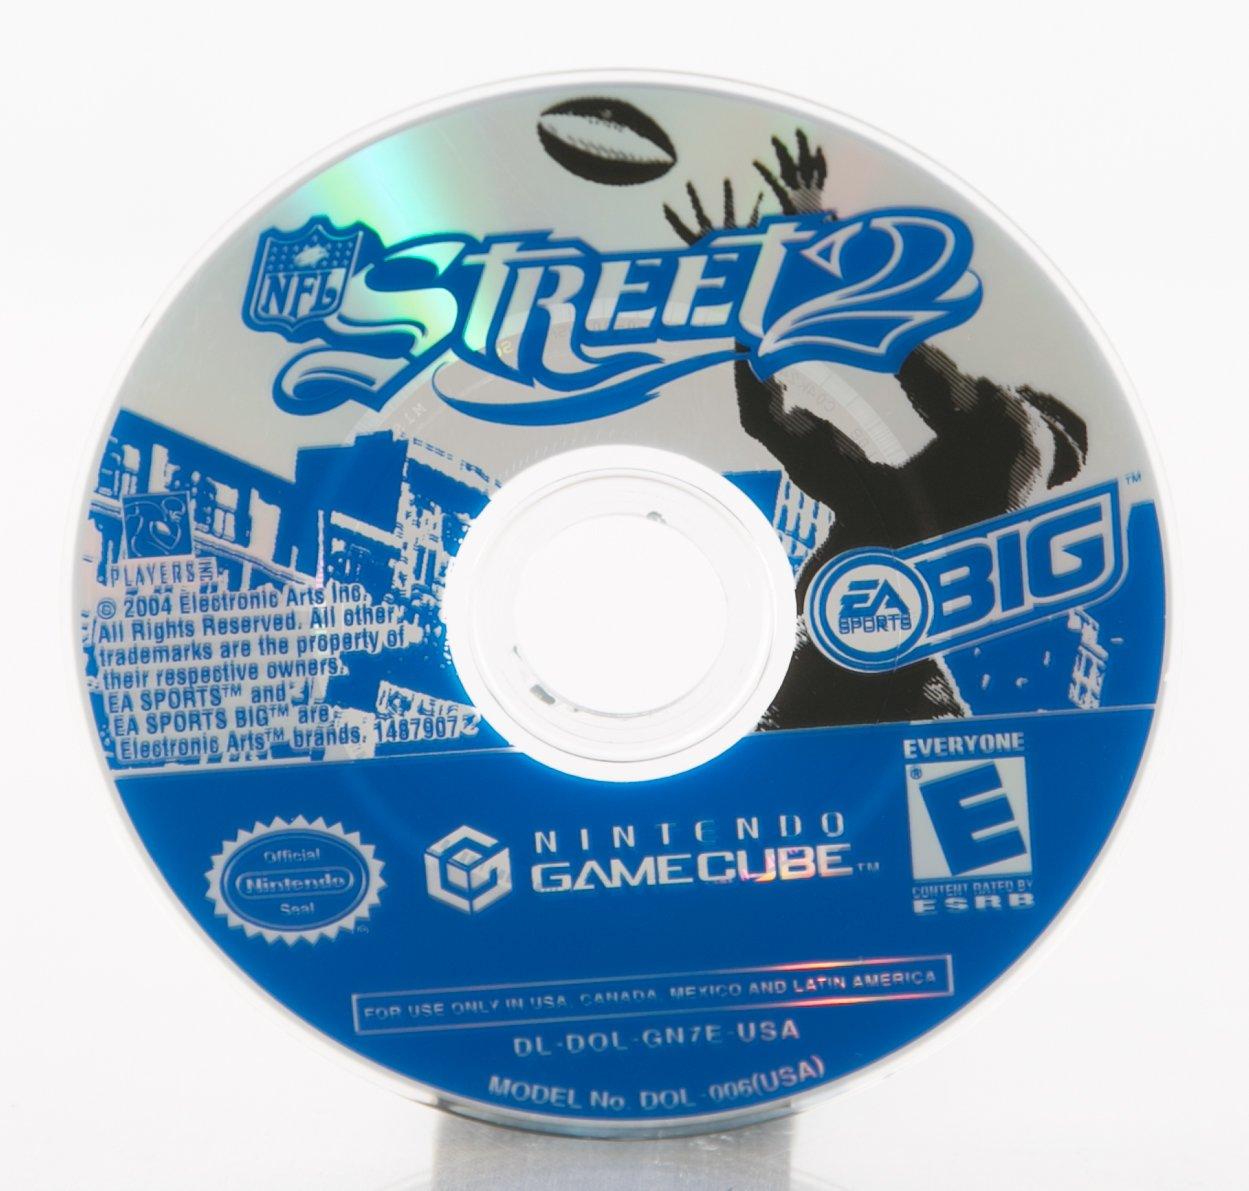 NFL Street Vol 2 - GameCube | Game Cube | GameStop